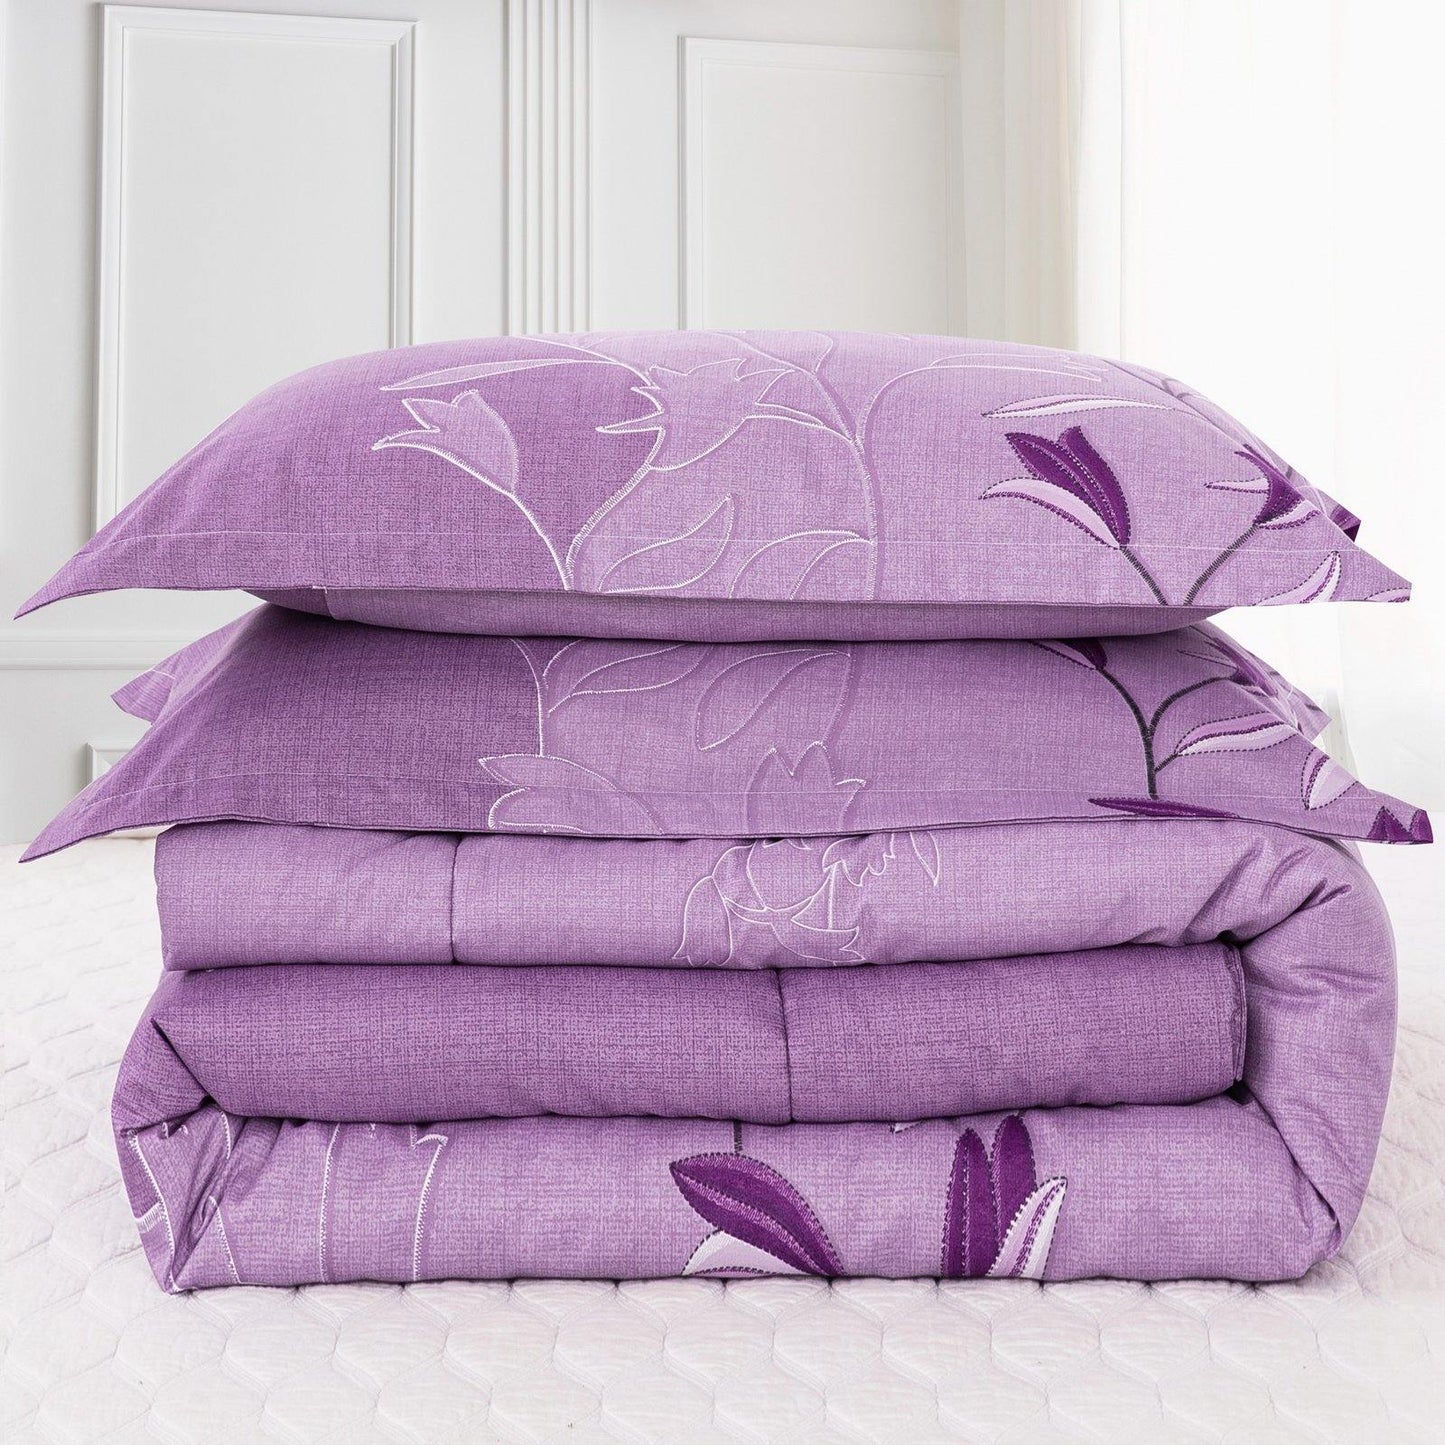 WONGS BEDDING Purple print Comforter set 3 Pieces Bedding Comforter with 2 Pillow Cases - Wongs bedding